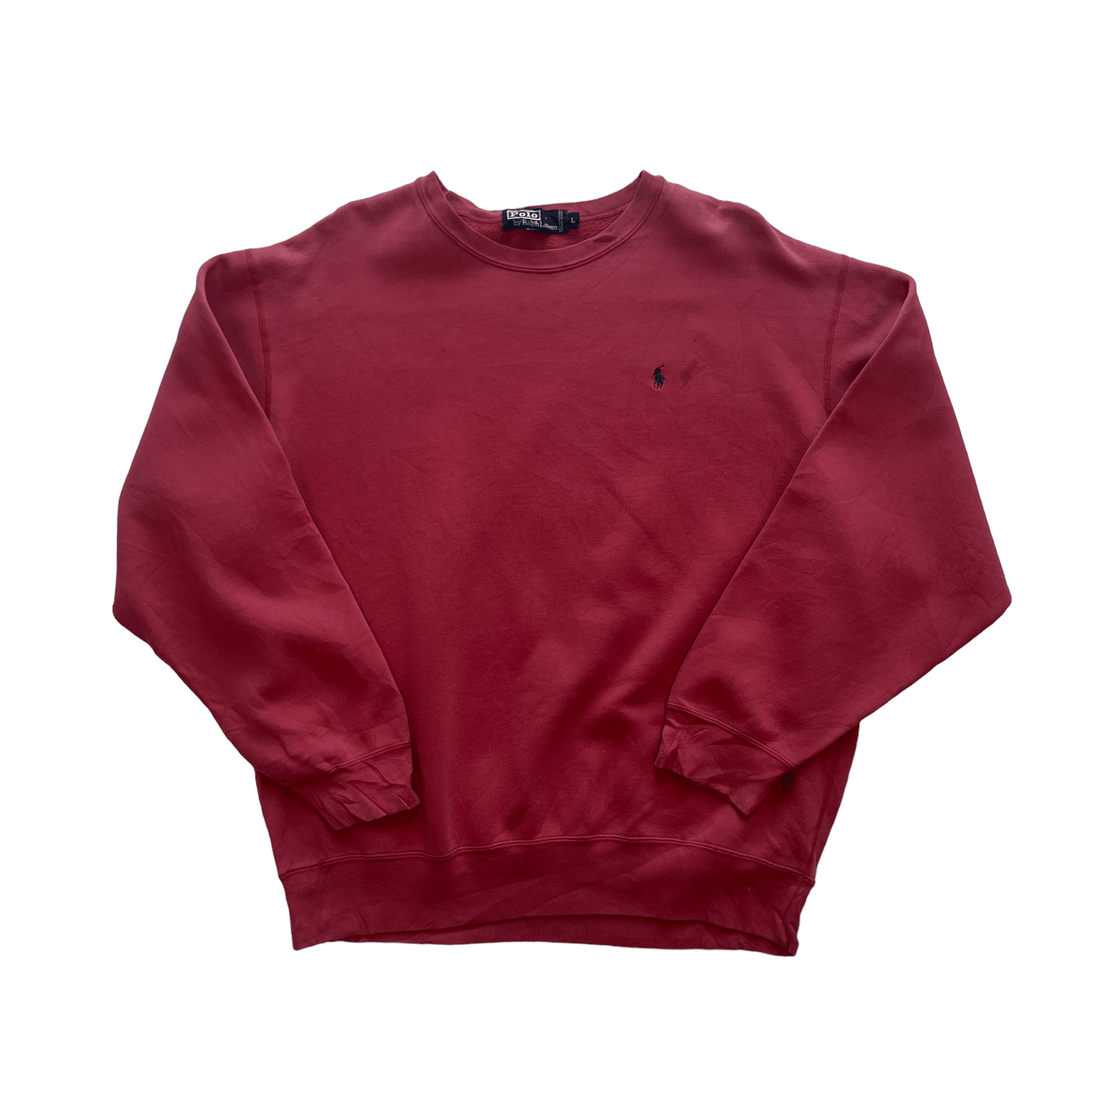 Vintage 90s Pink/ Red Polo Ralph Lauren Sweatshirt - Large - The Streetwear Studio